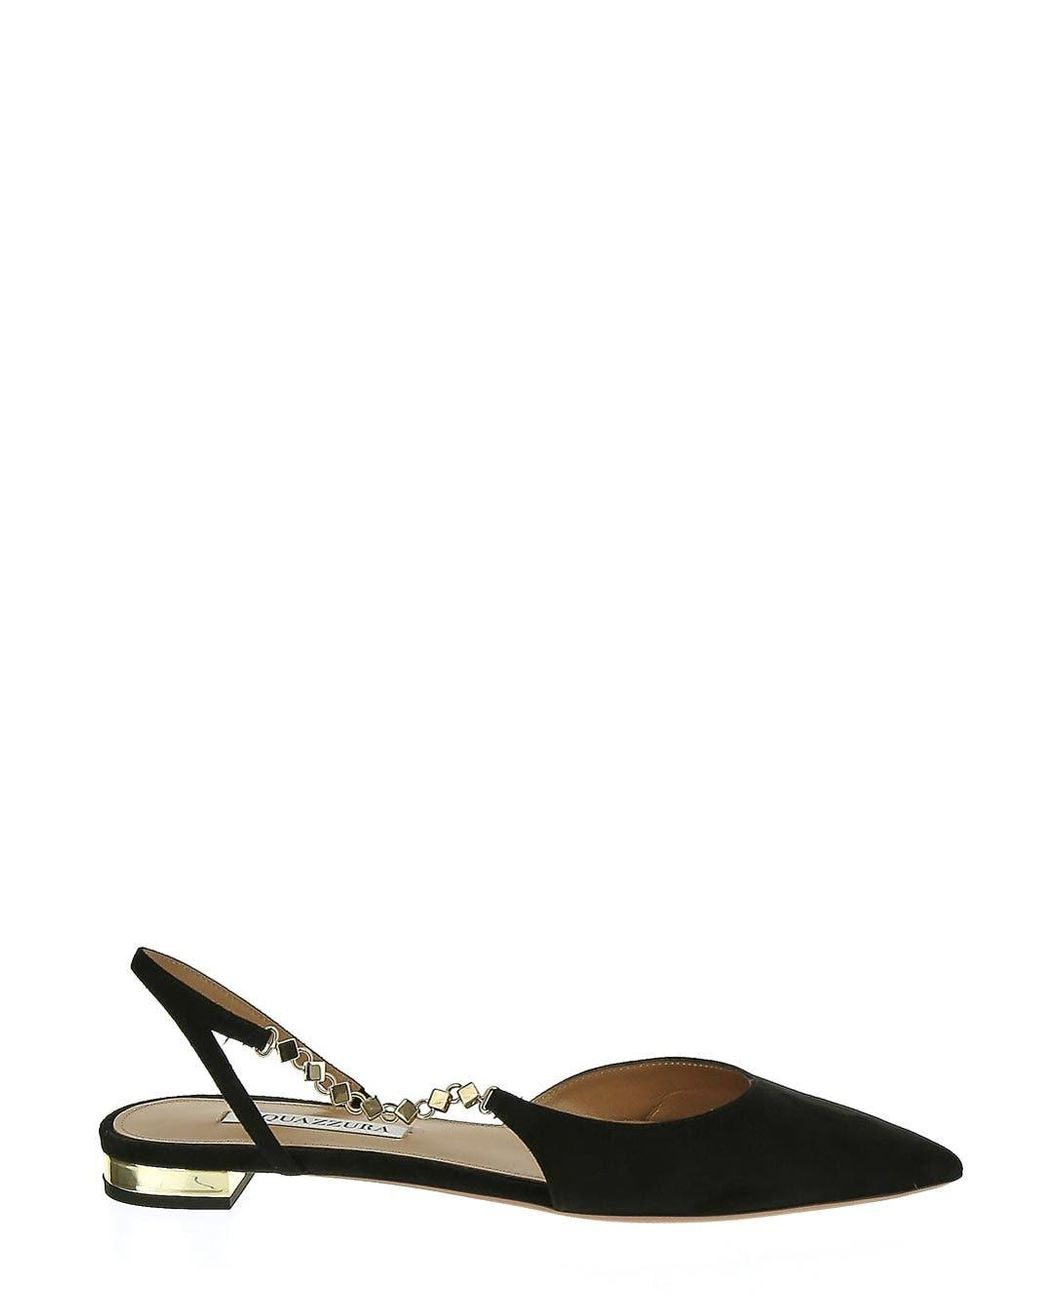 Aquazzura Gramercy Flat Shoes in Black | Lyst